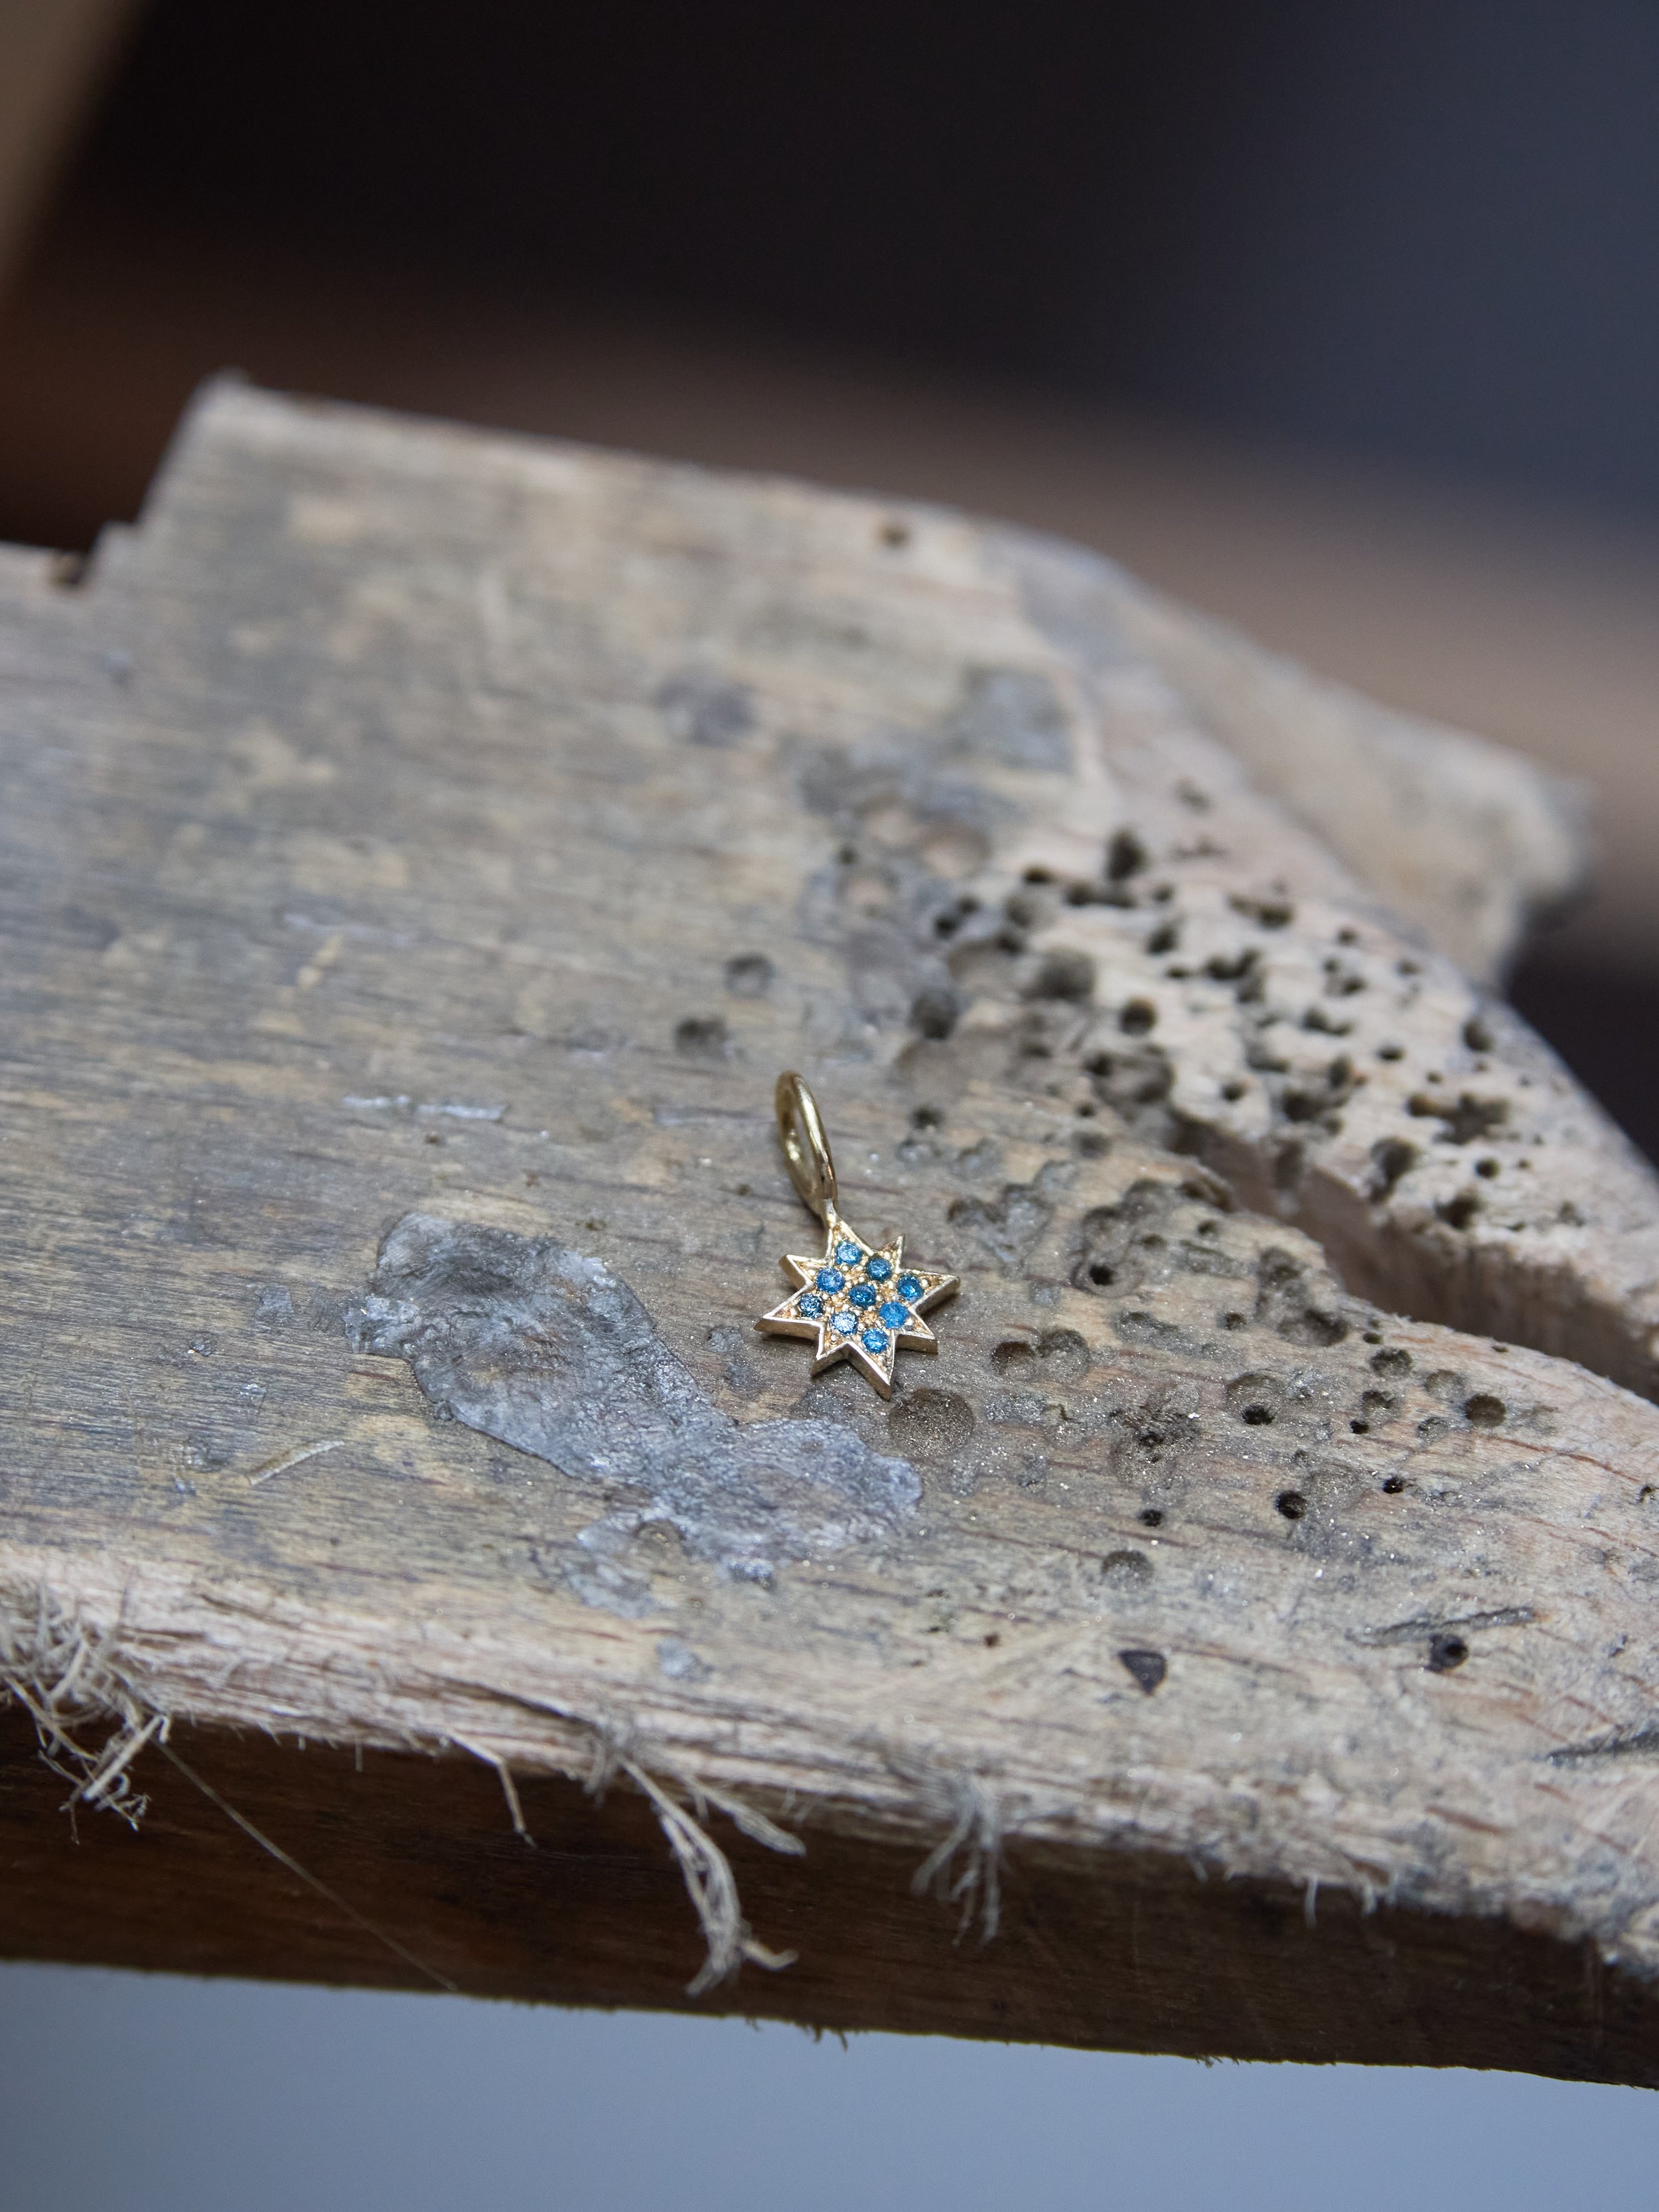 Lucky charm star-shaped pendant with blue diamonds - Palma de Mallorca